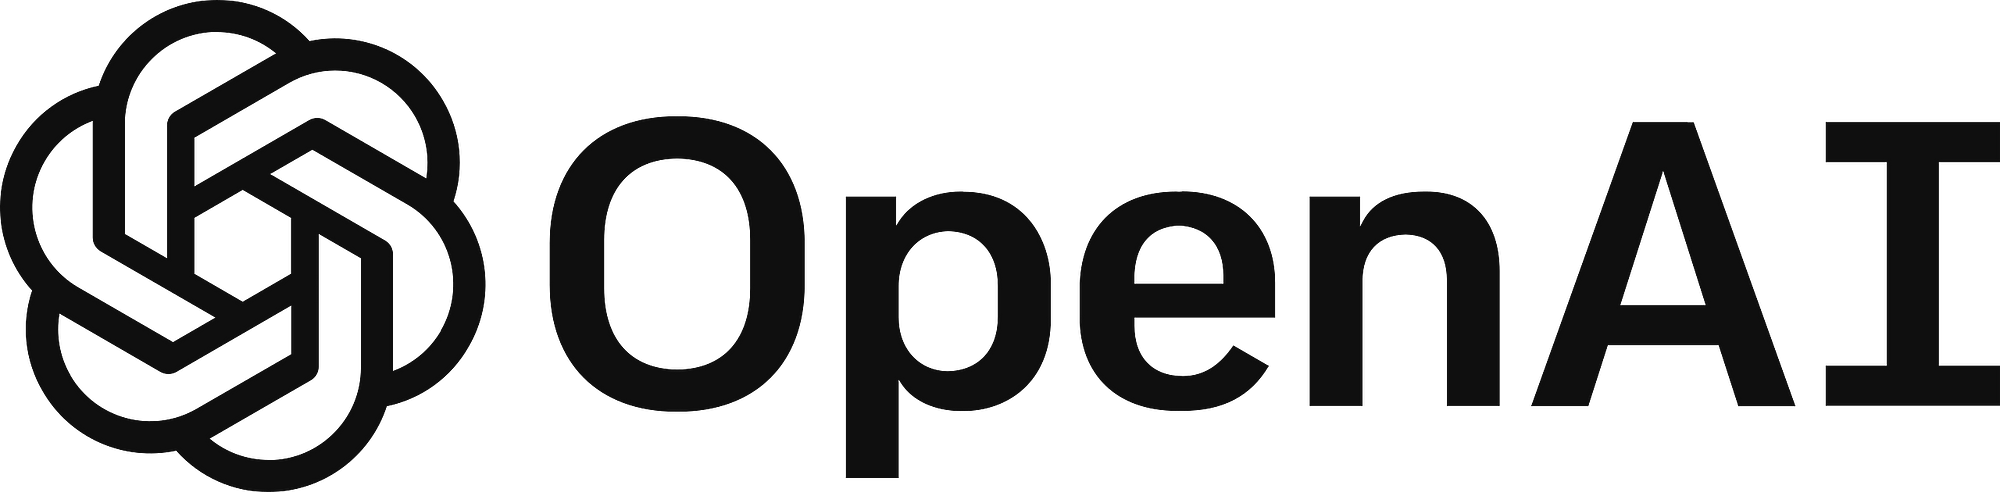 One of the AI text generator tools OpenAI's logo